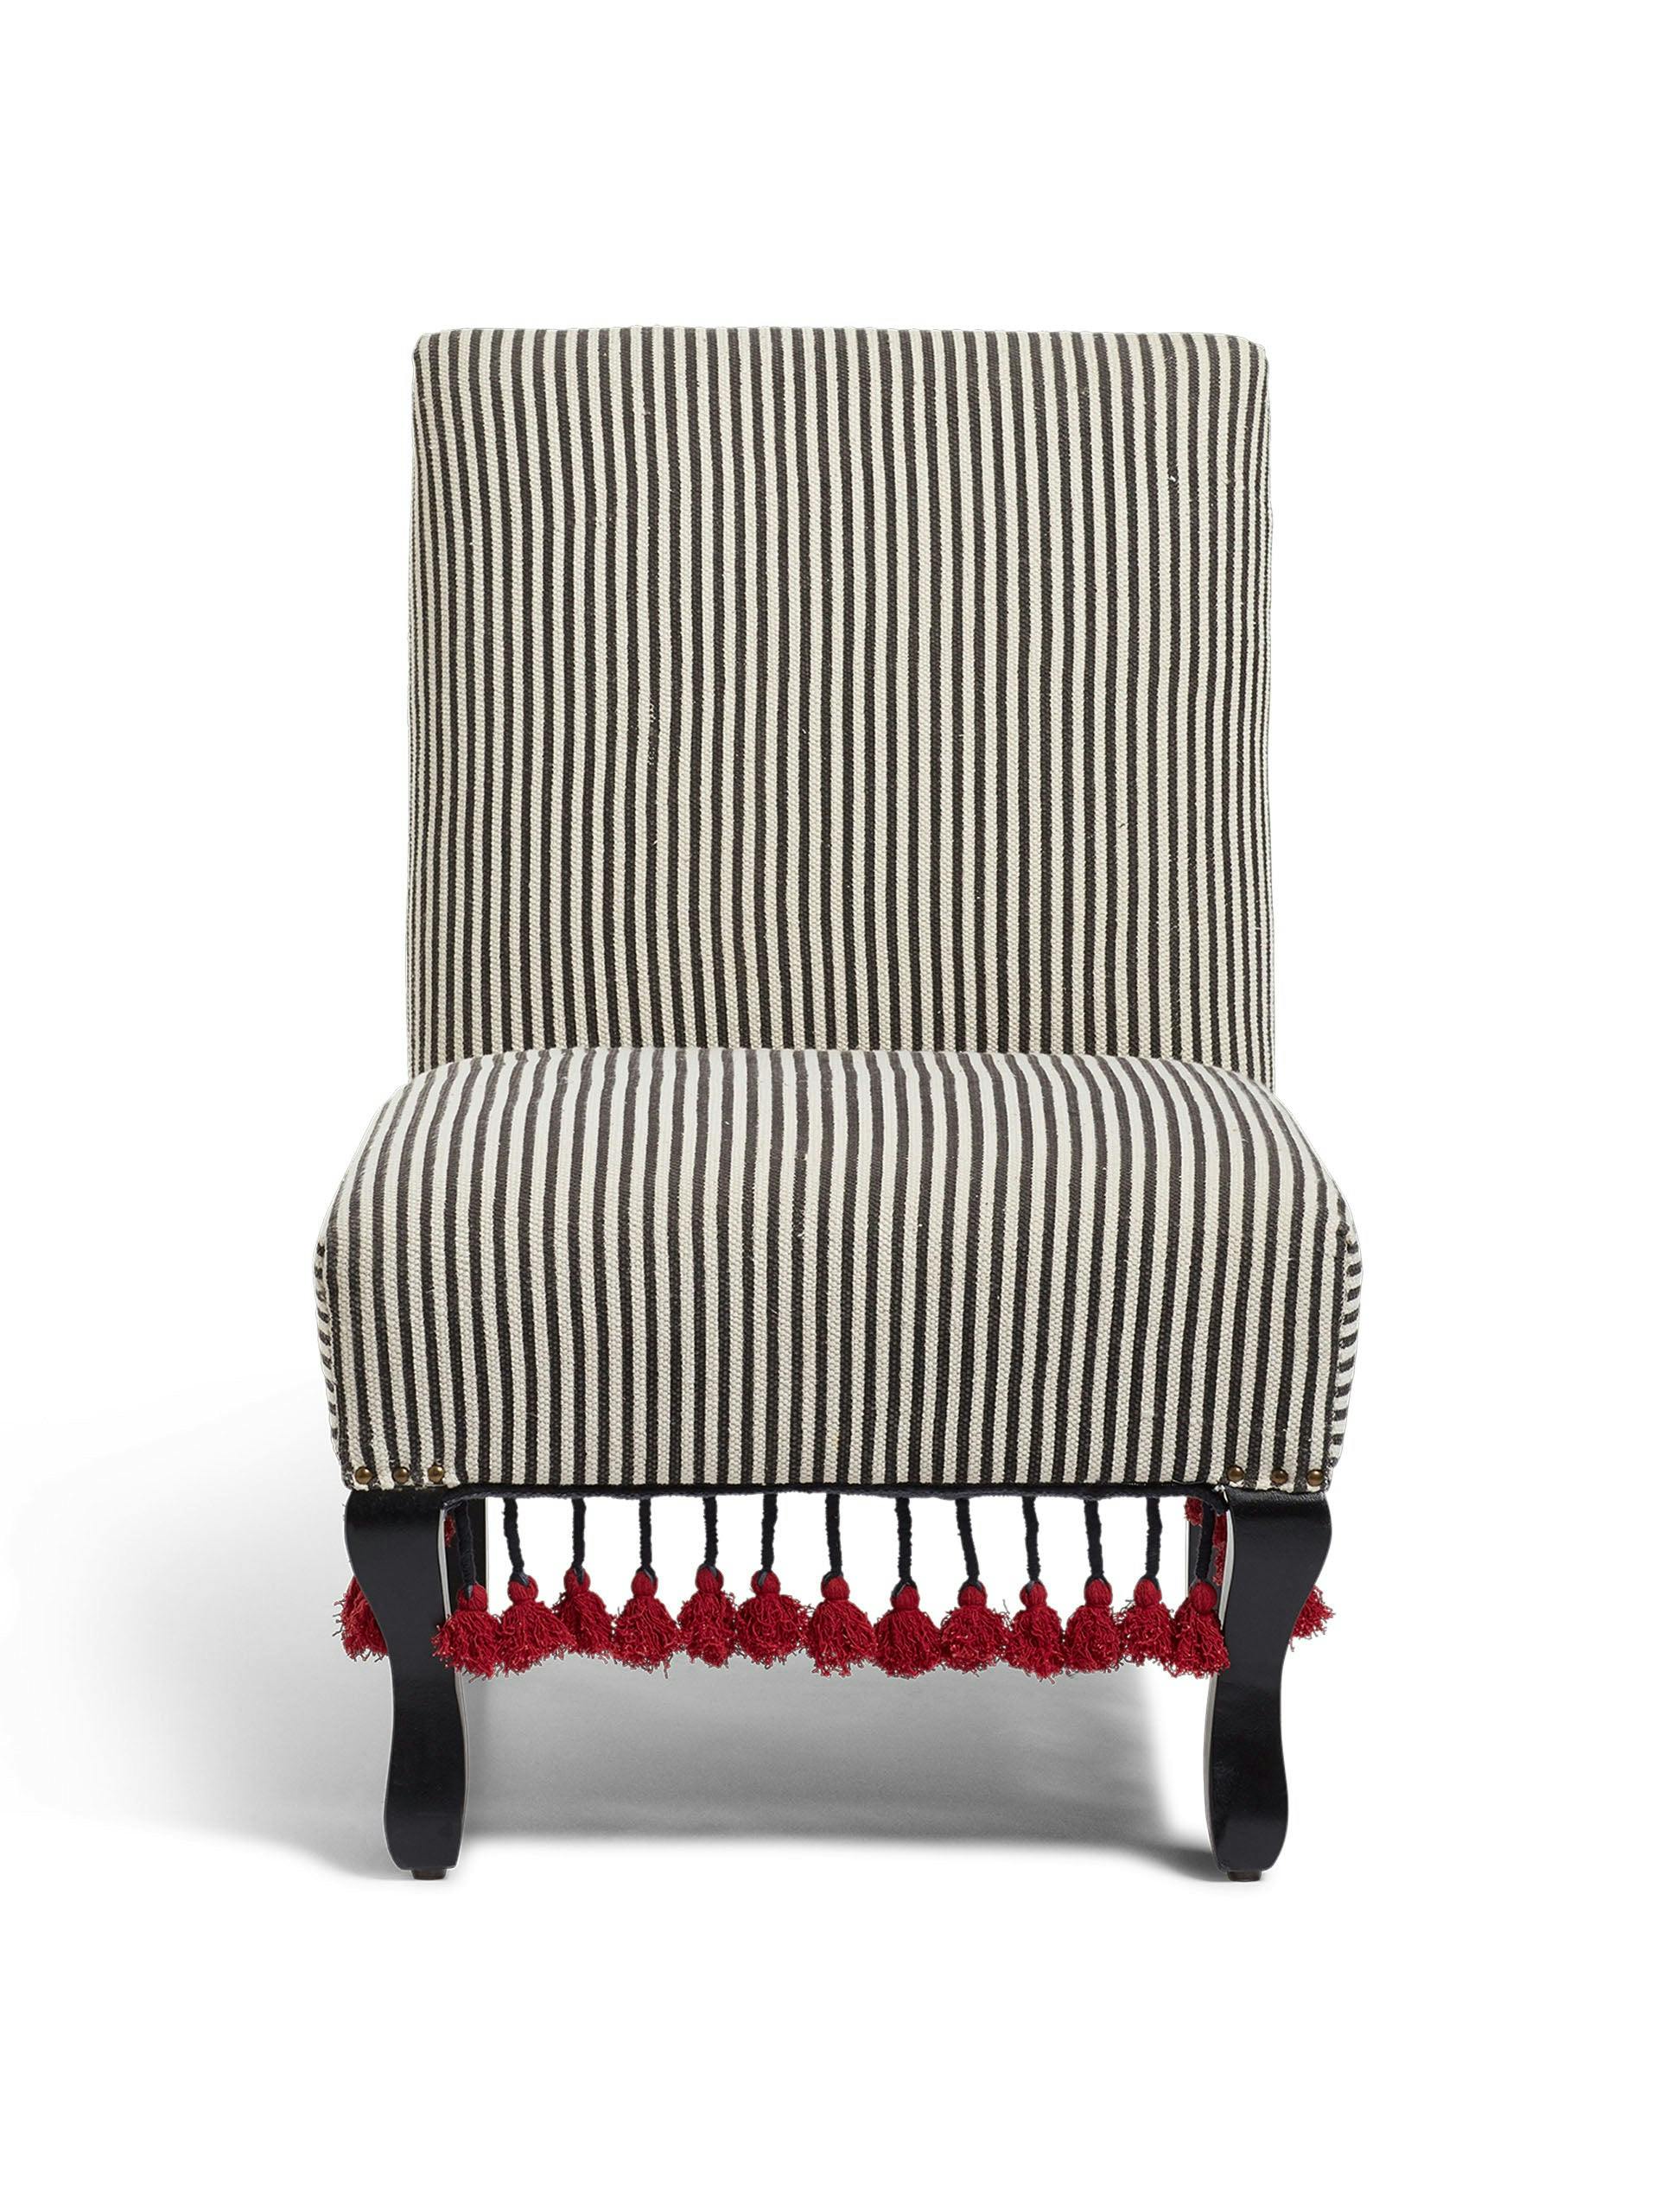 Tarma armless stripe fringe chair